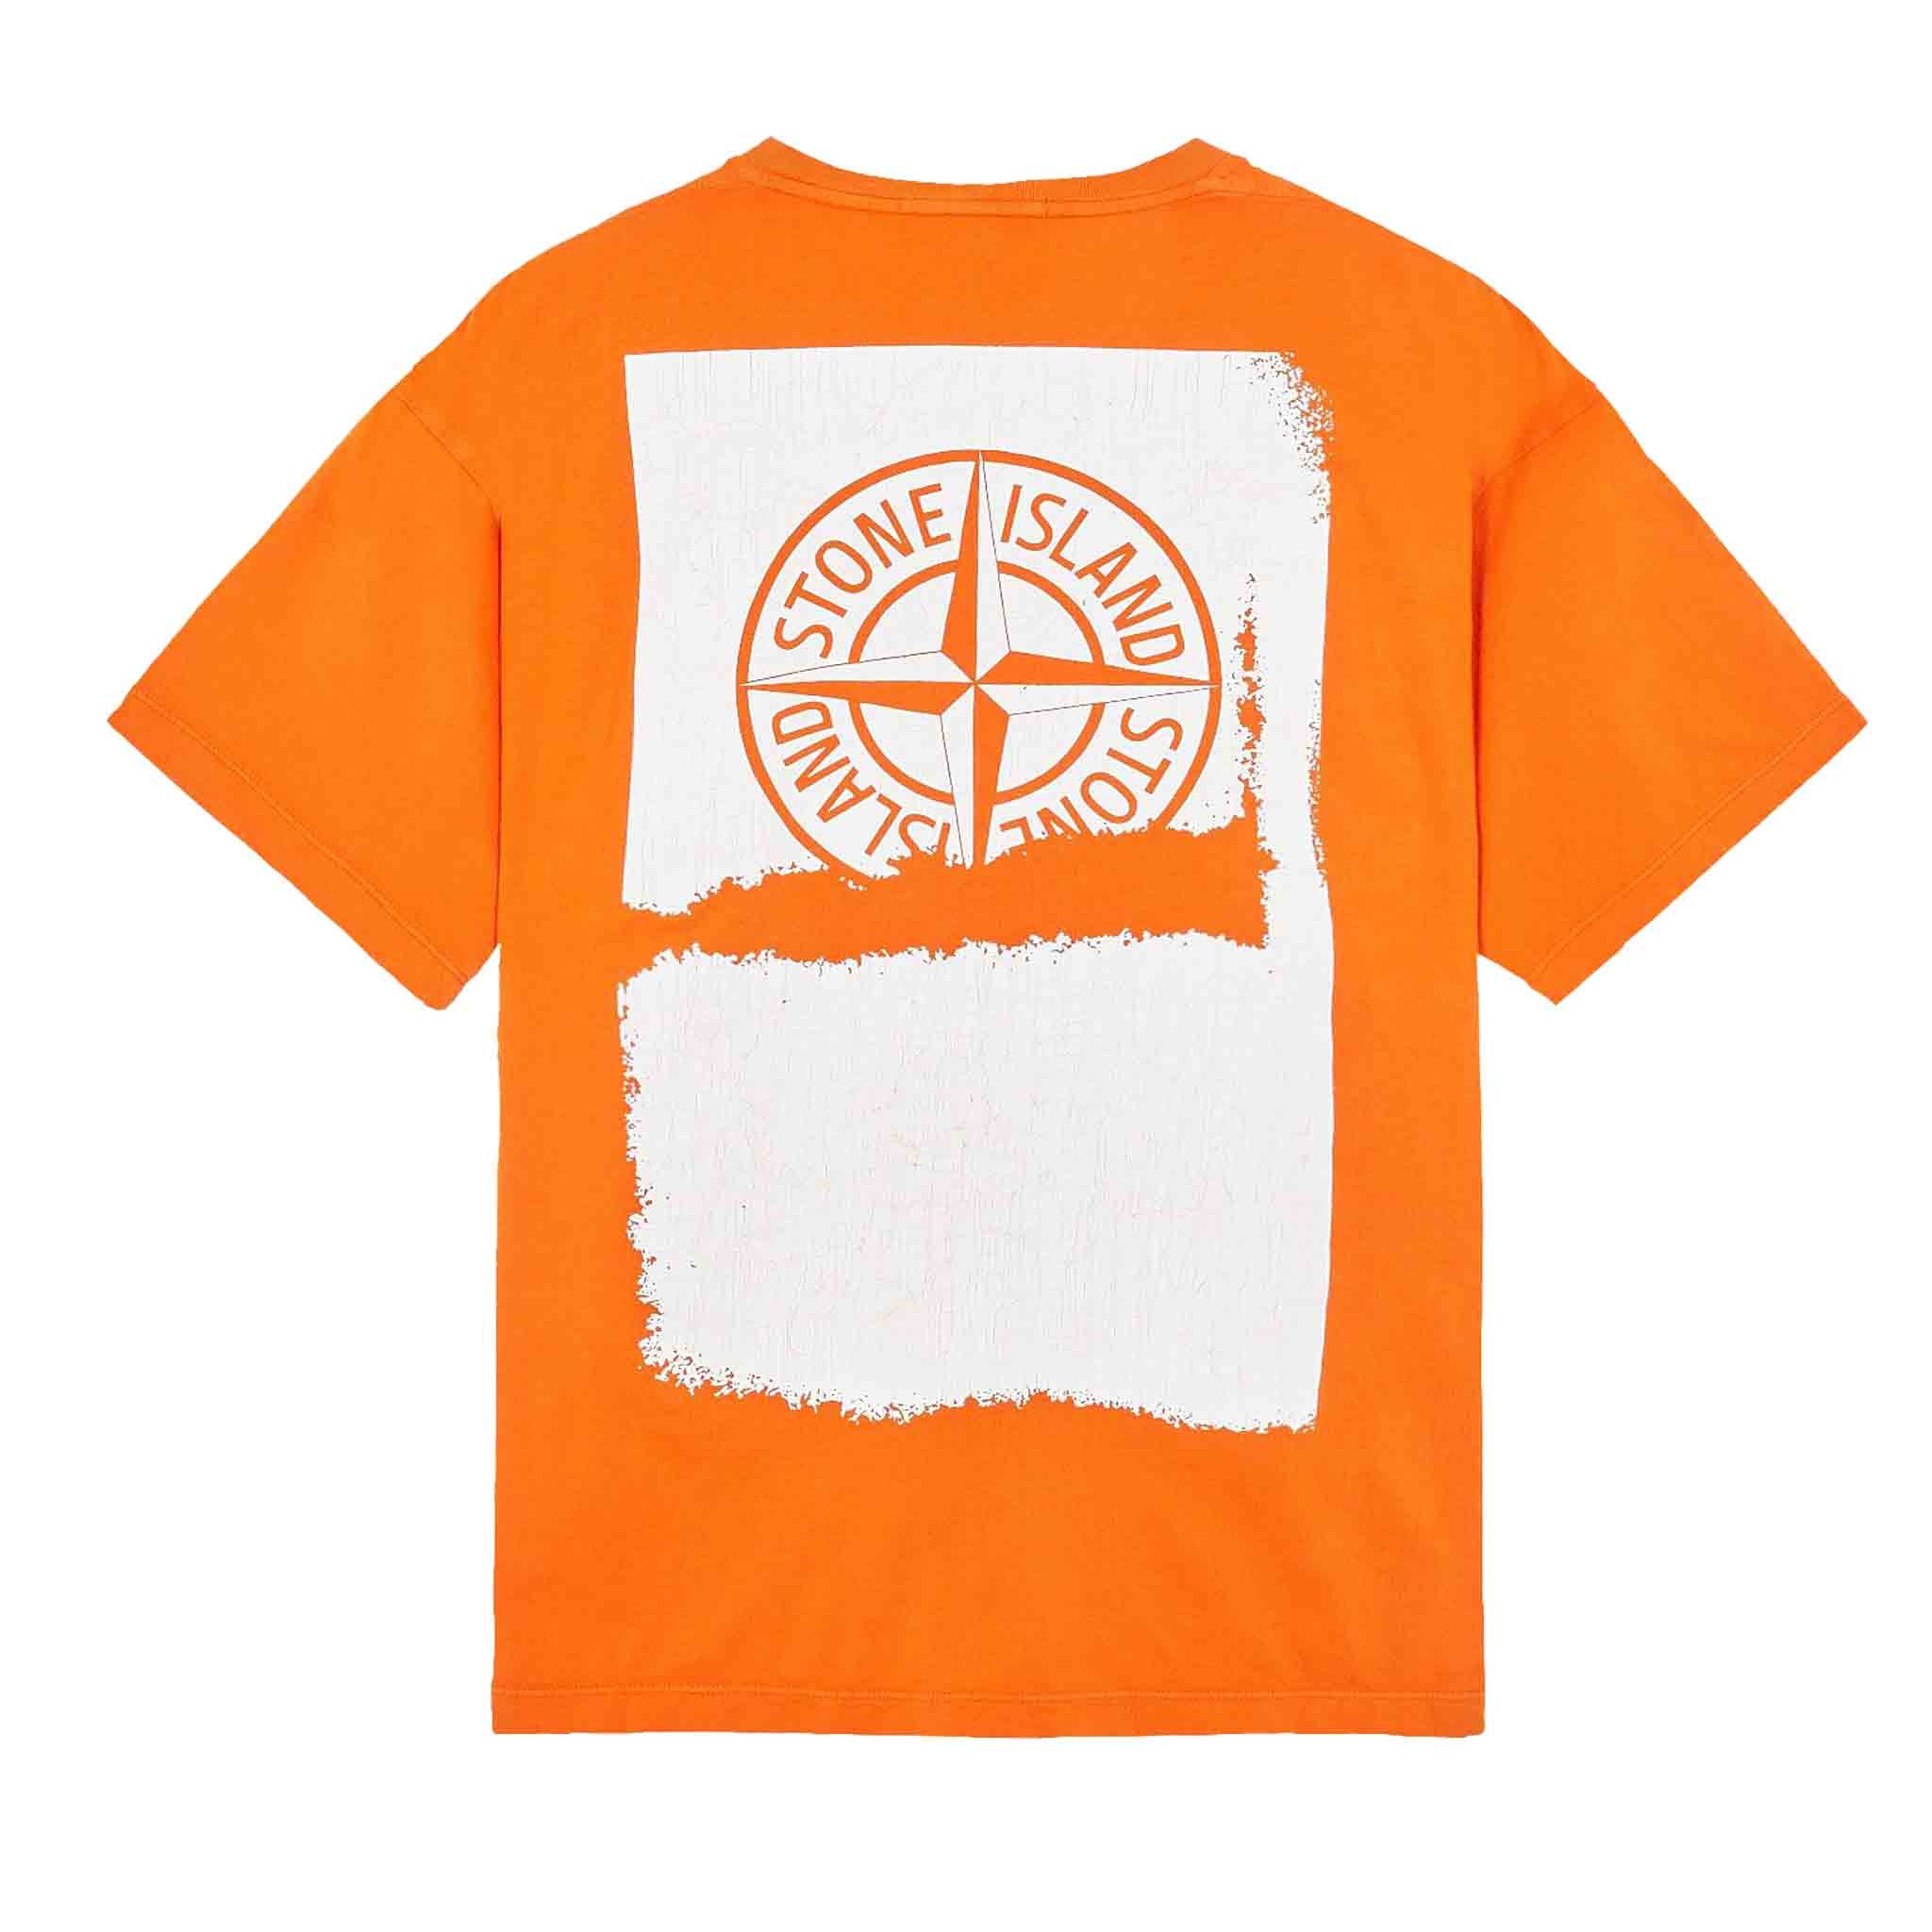 Stone Island "Camo One" Print T-Shirt in Orange